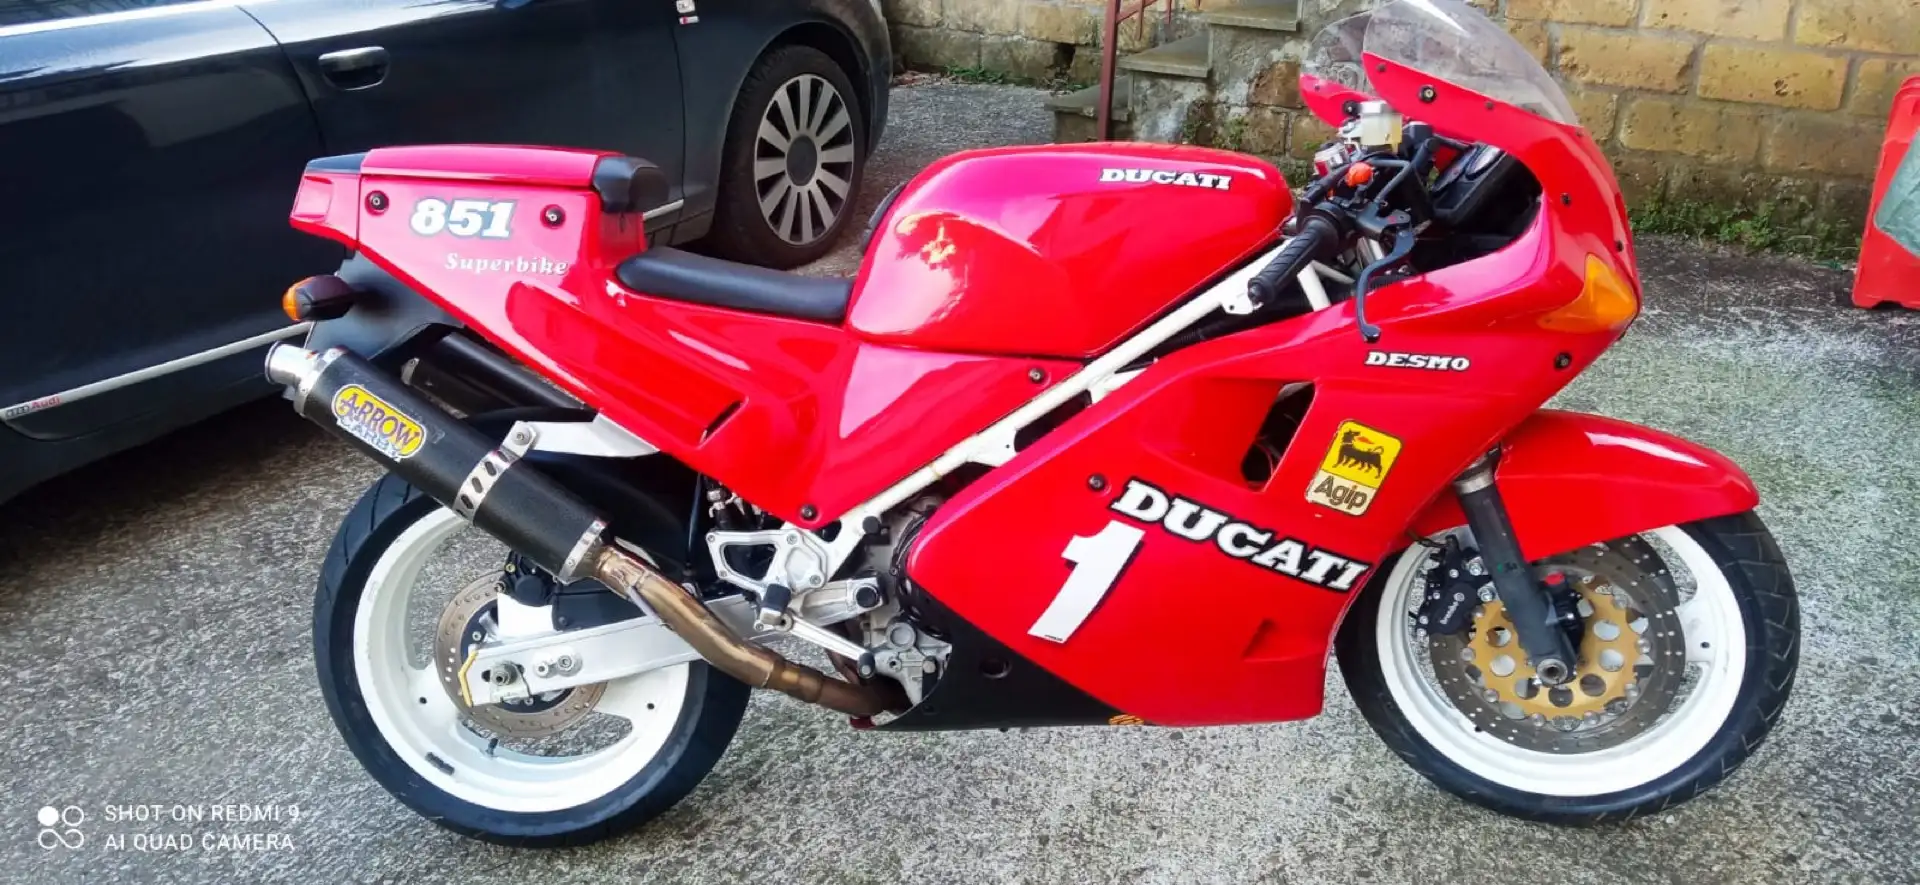 Ducati 851 superbike Rosso - 2